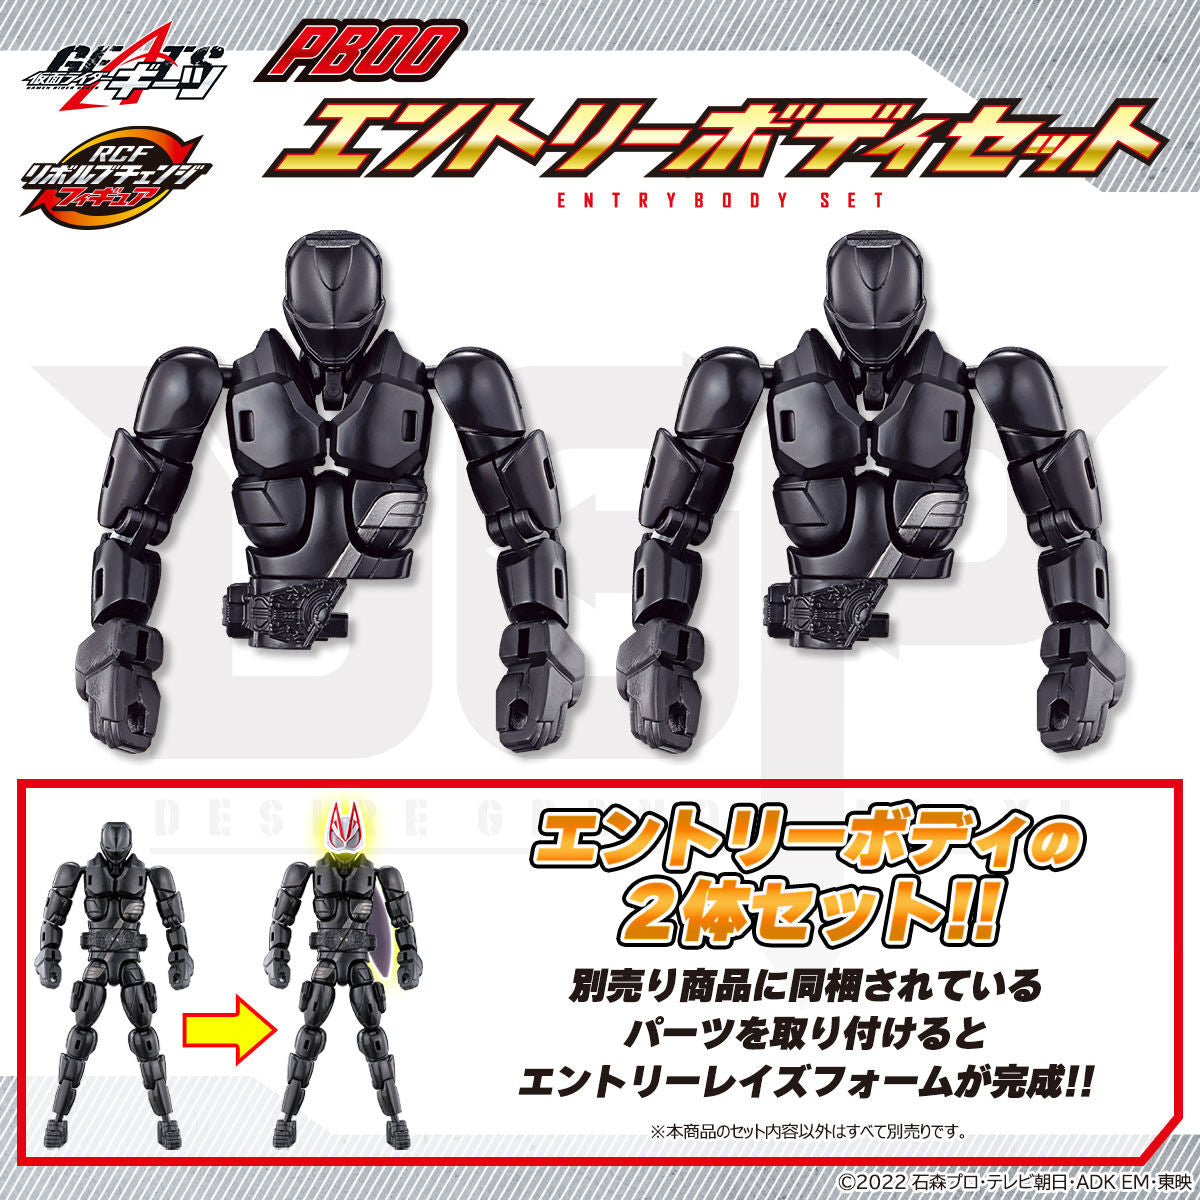 Kamen Rider Geats Revolve Change PB00 - Entry Body Set